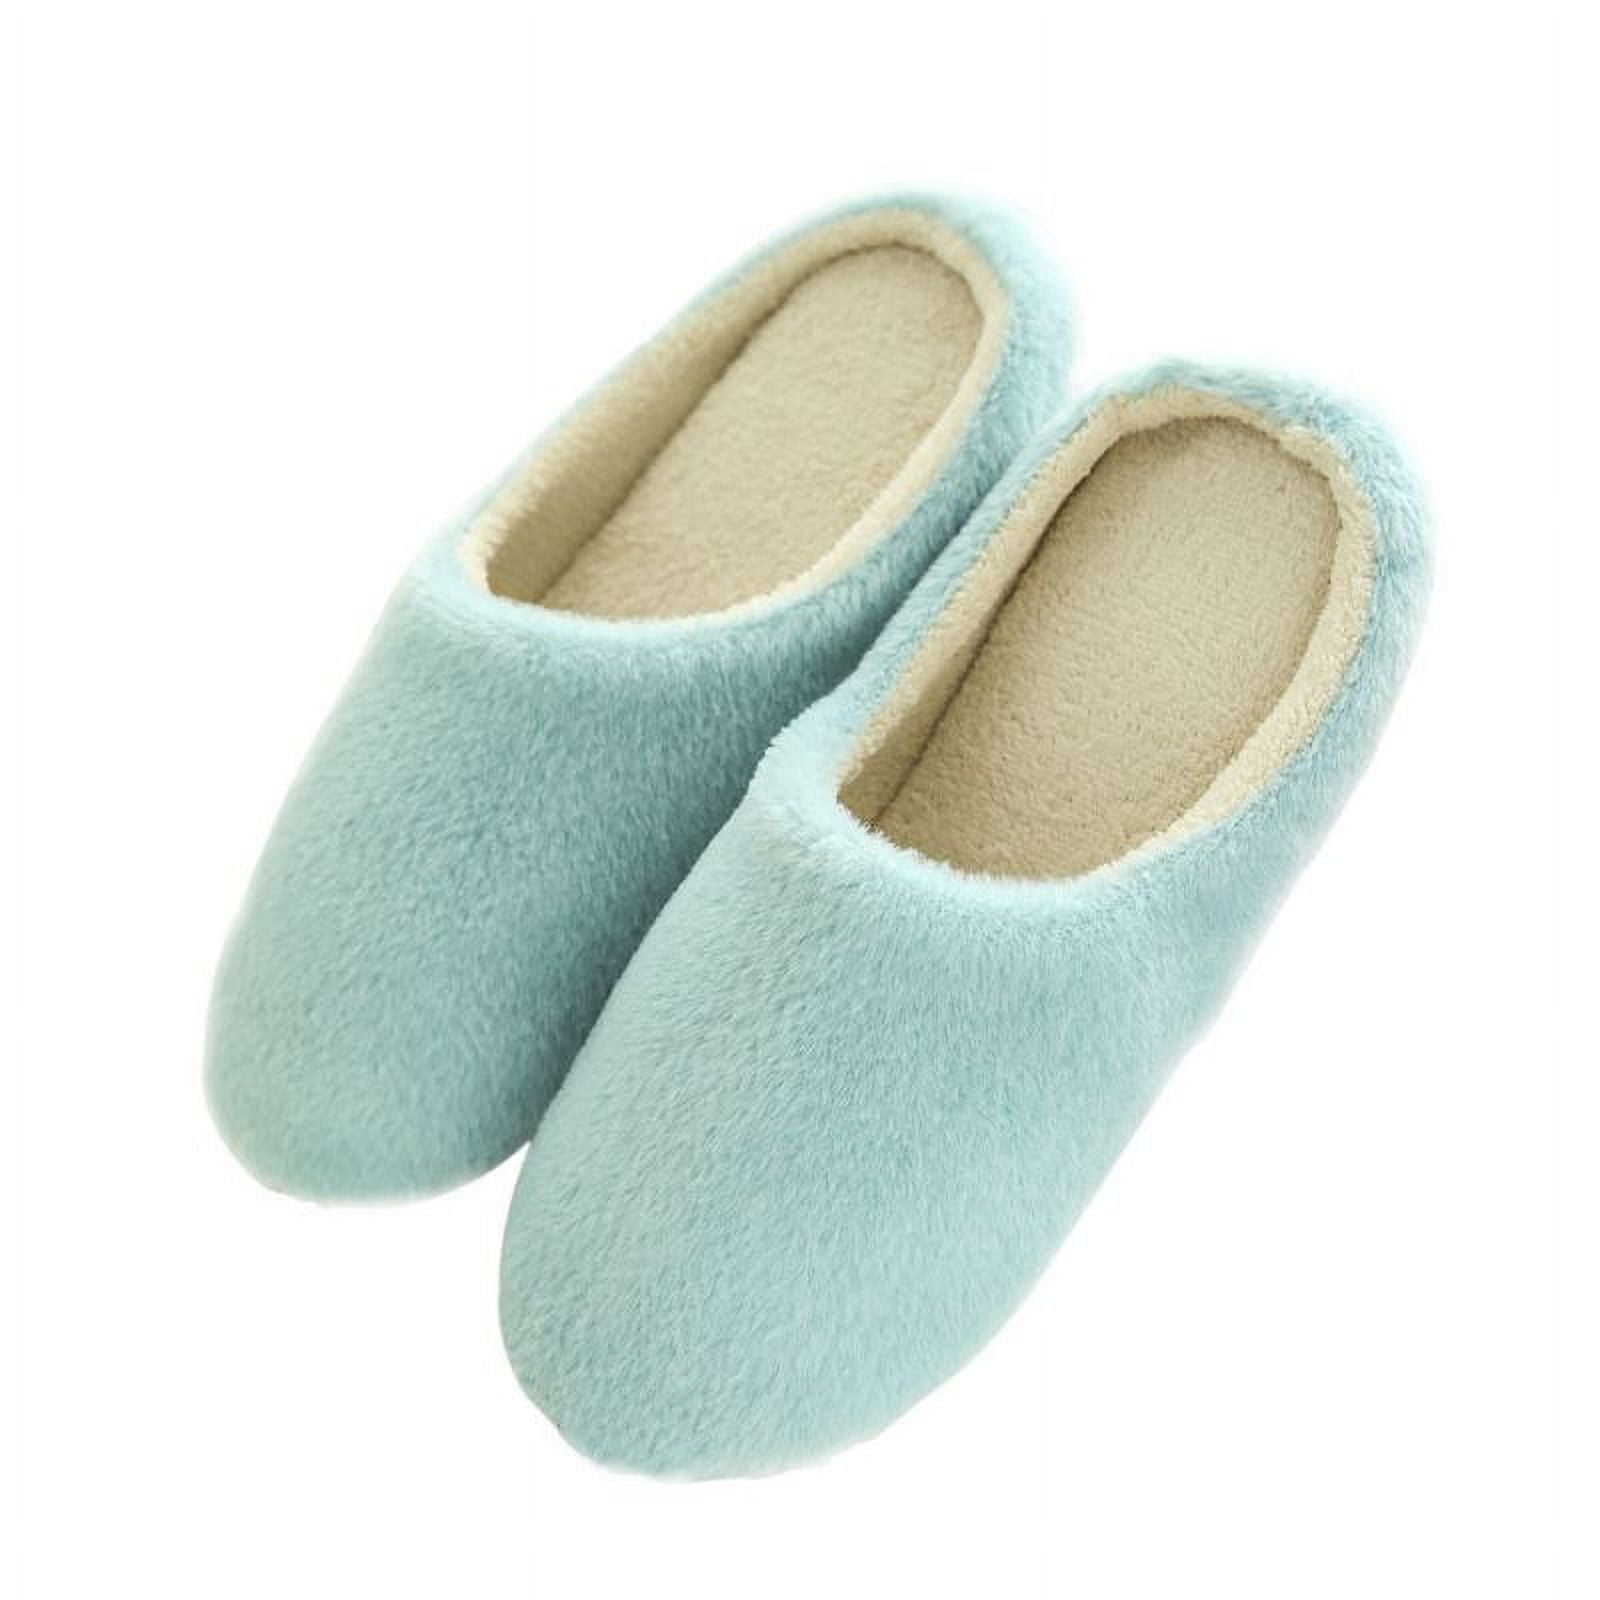 Peyan Women Winter Warm Fleece Anti-Slip Slippers Indoor House Shoes ...